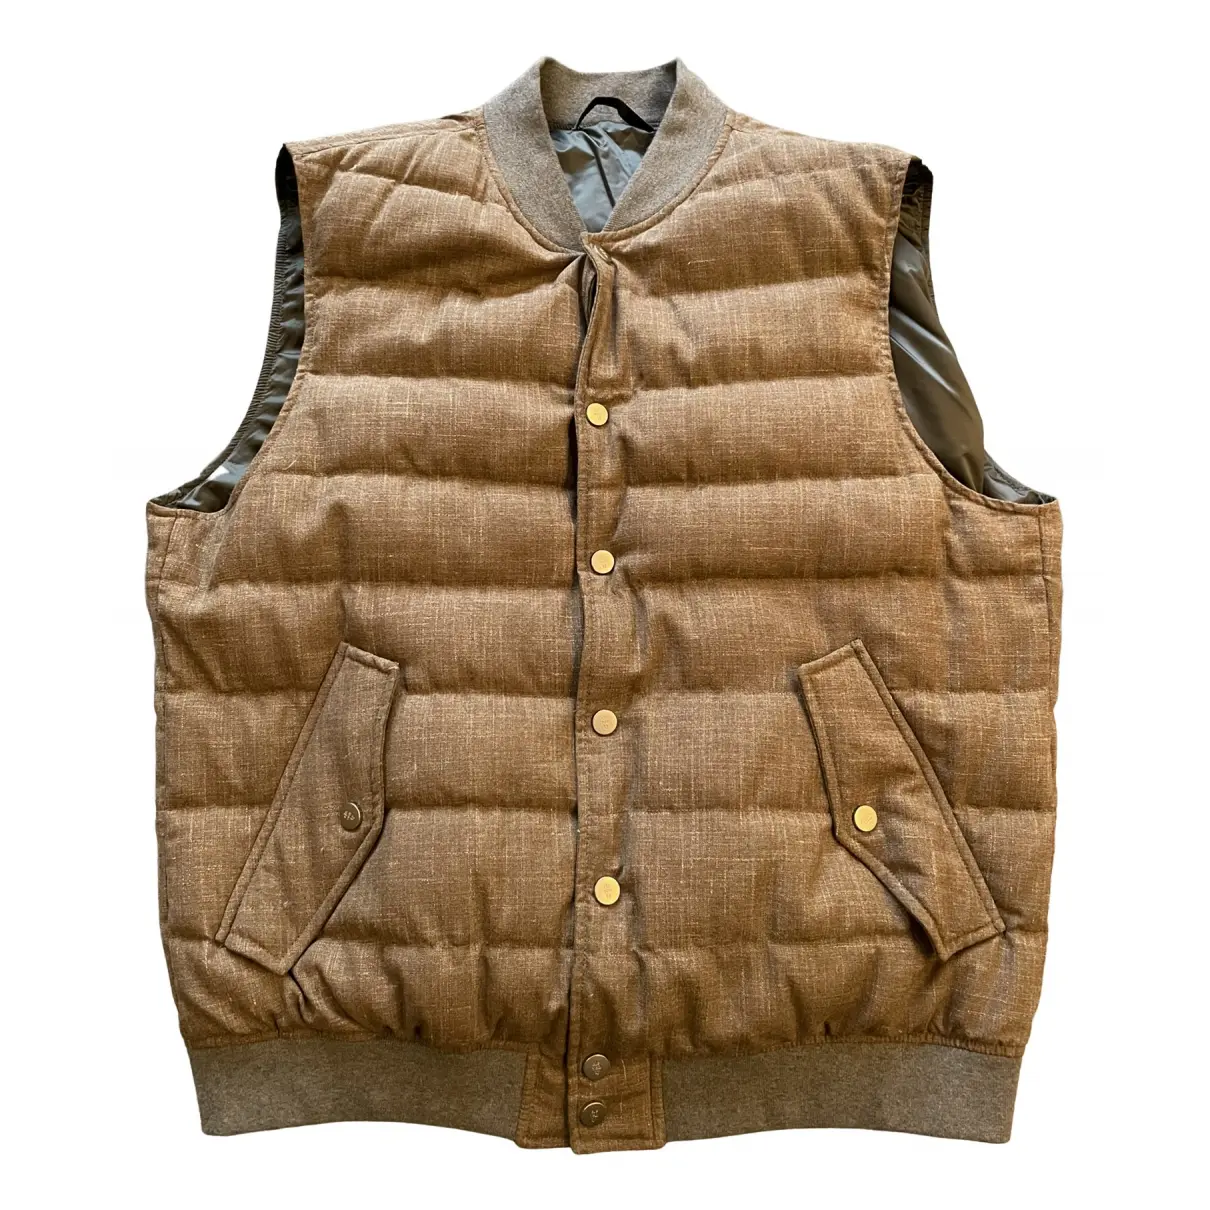 Wool vest eleventy